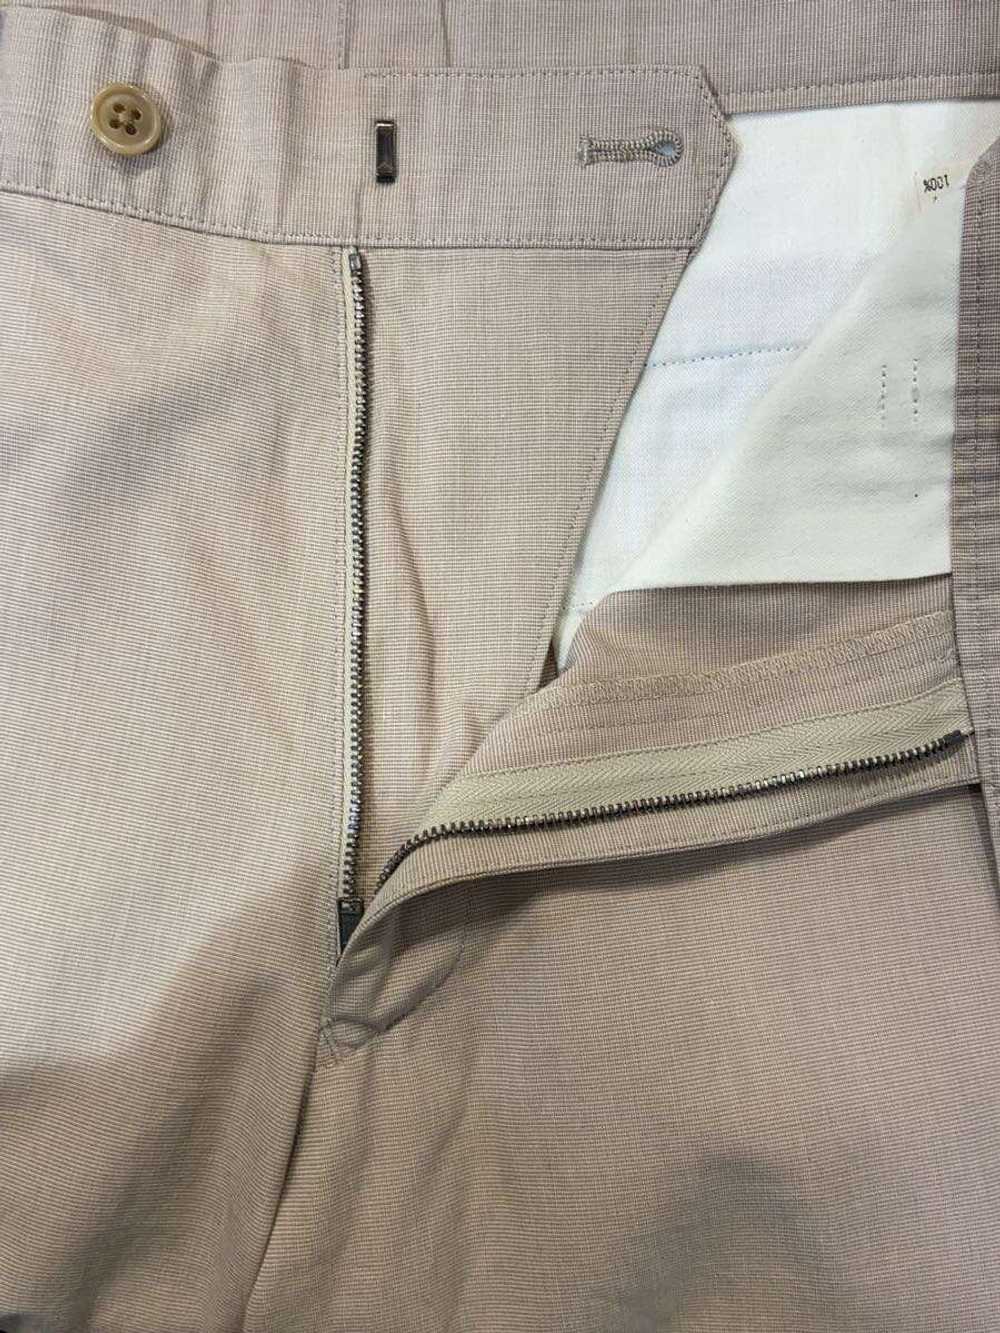 Used Issey Miyake Bottom/Cotton/Beige Men'S Wear - image 3